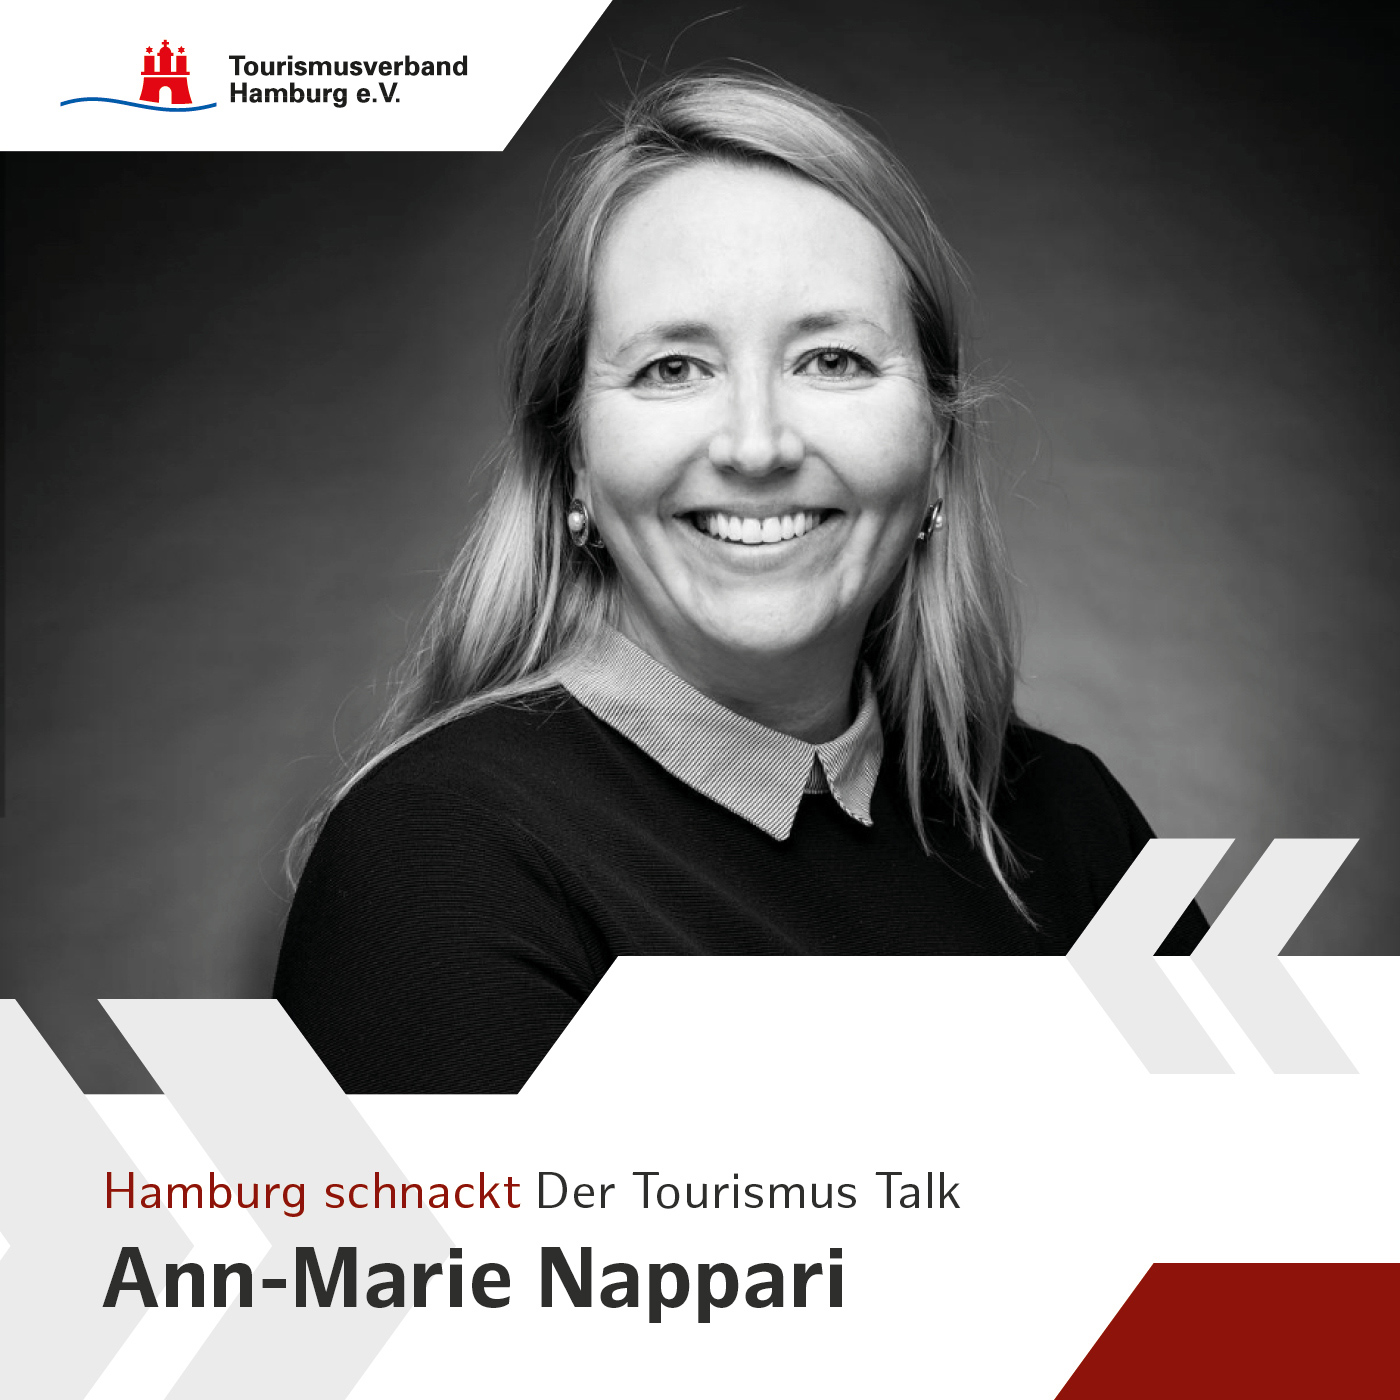 Hamburg schnackt mit Ann-Marie Nappari